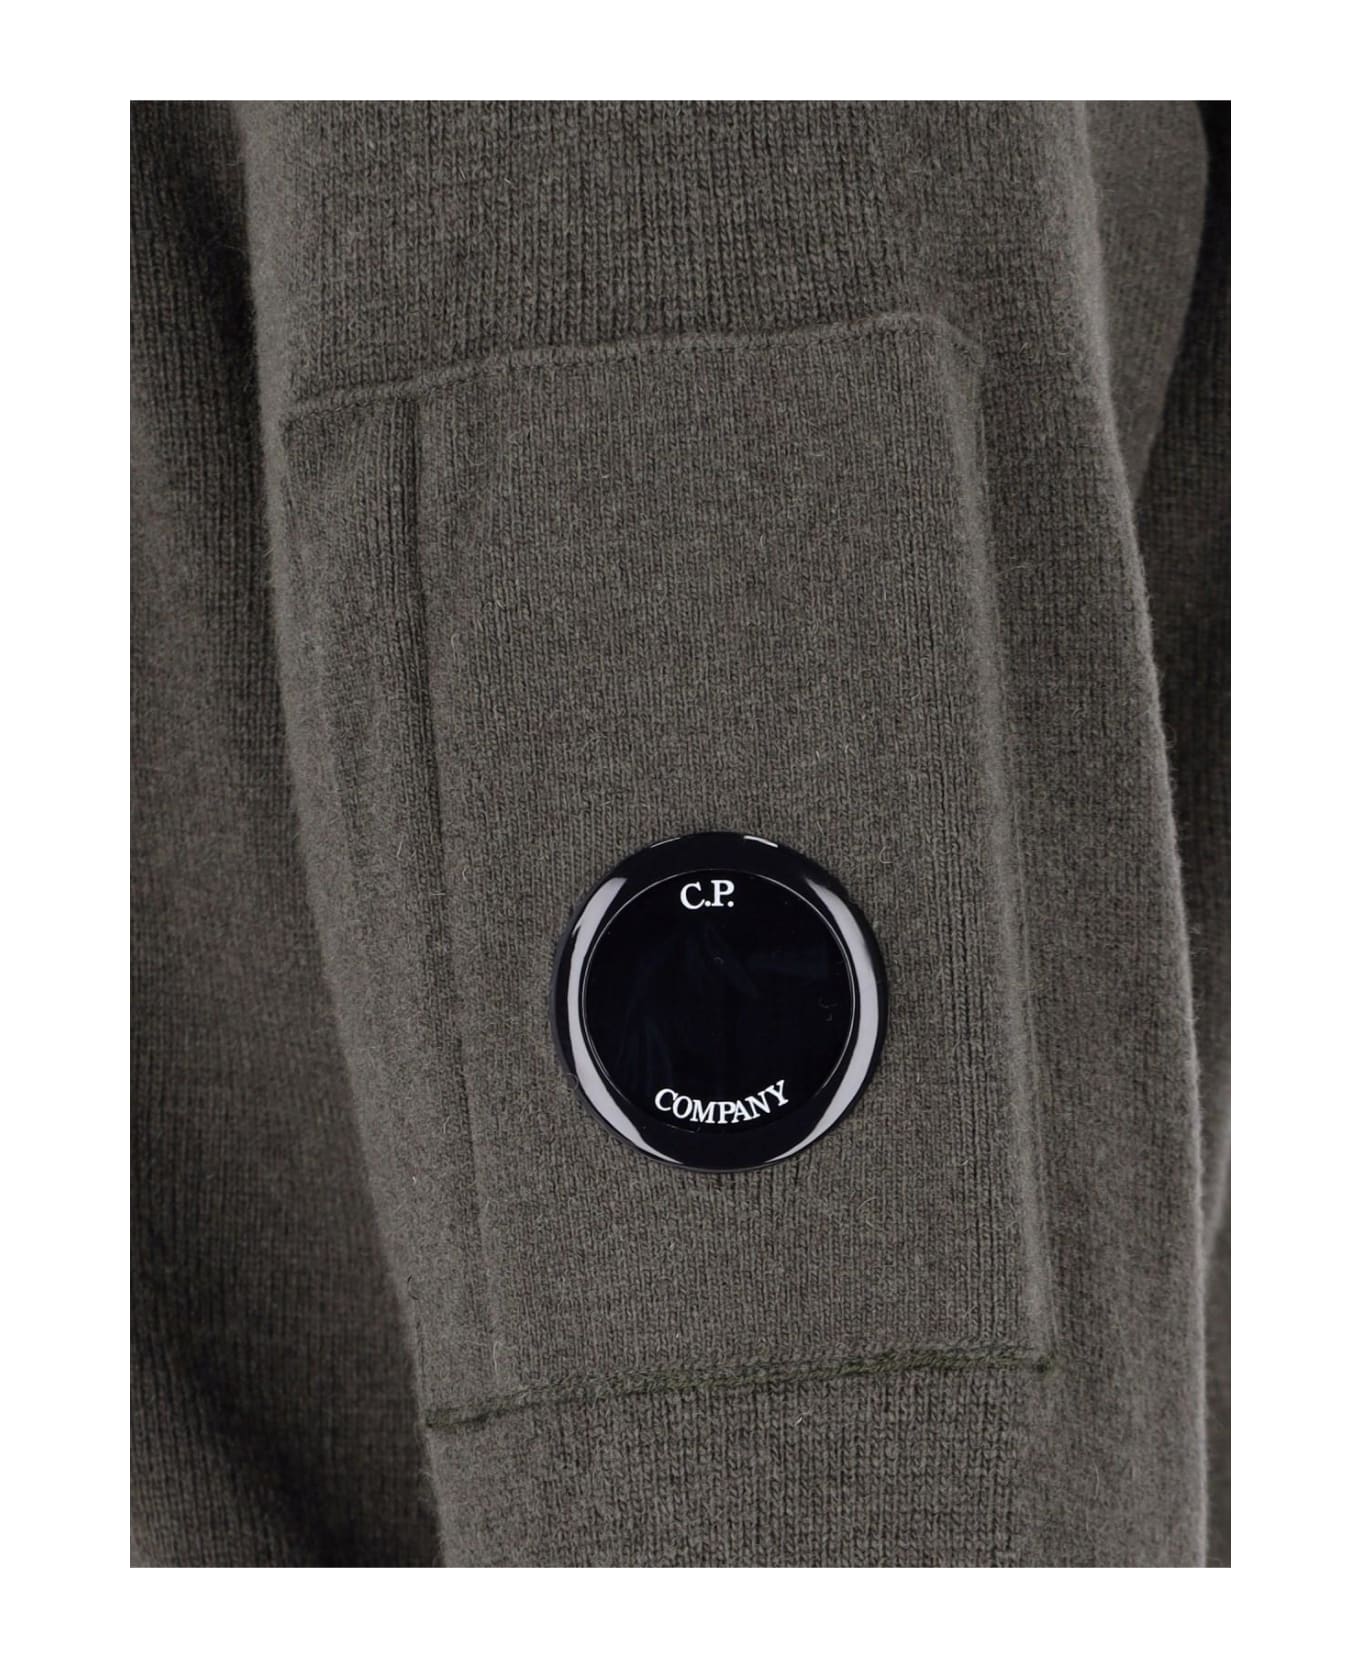 C.P. Company 'lens' Knit Sweatshirt - Verde ニットウェア